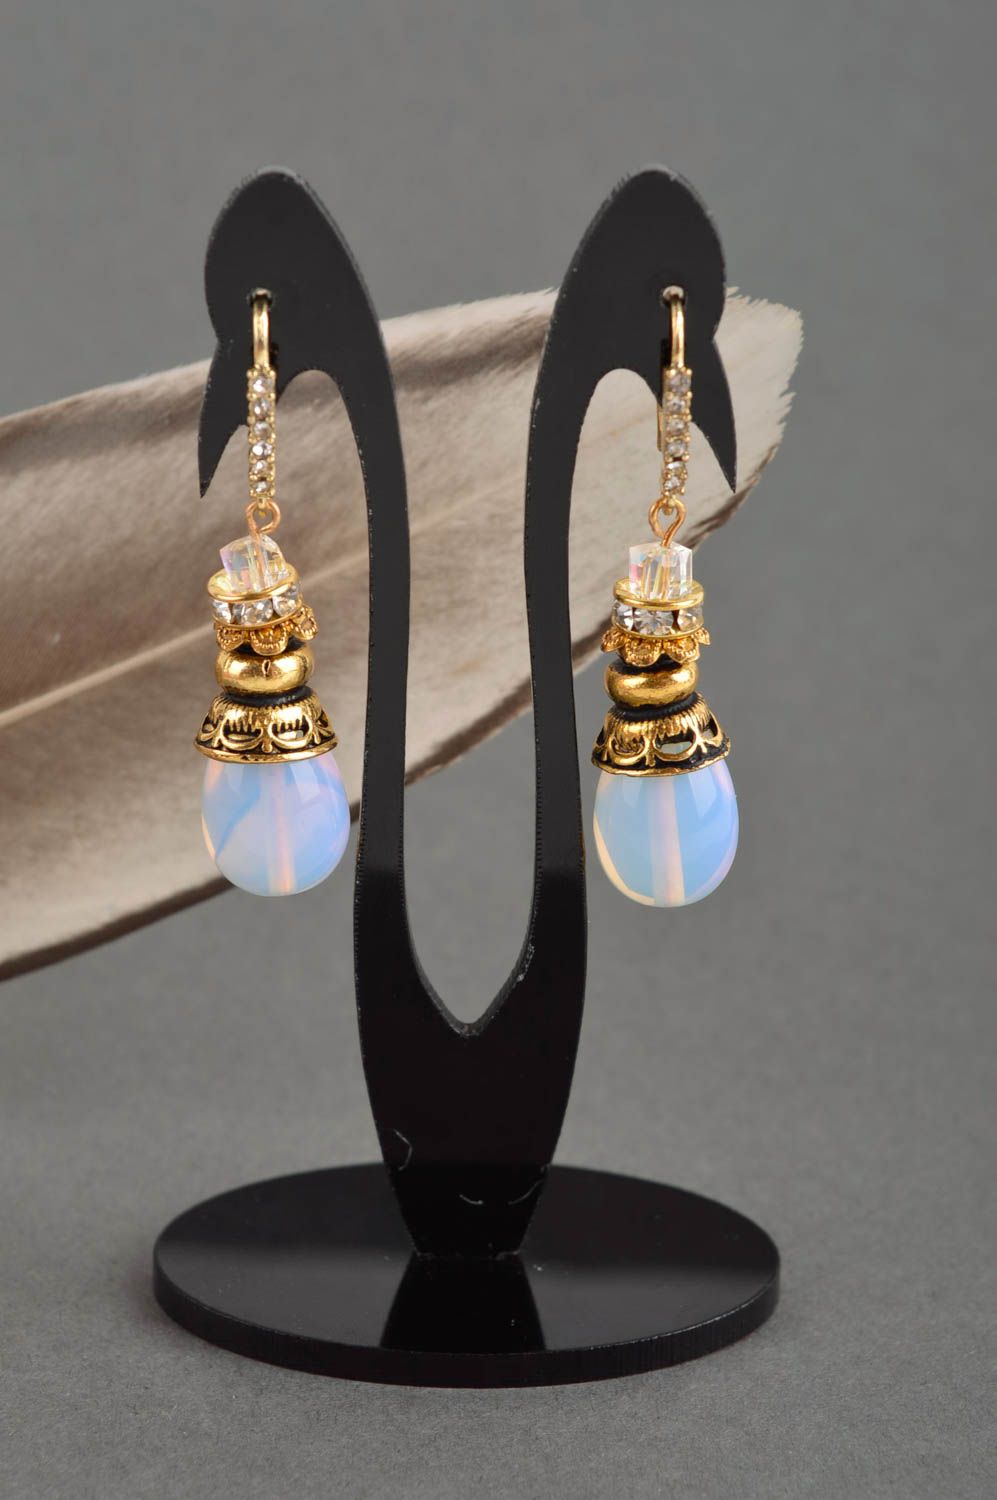 Handmade jewelry gemstone accessories designer accessories earrings for women photo 1